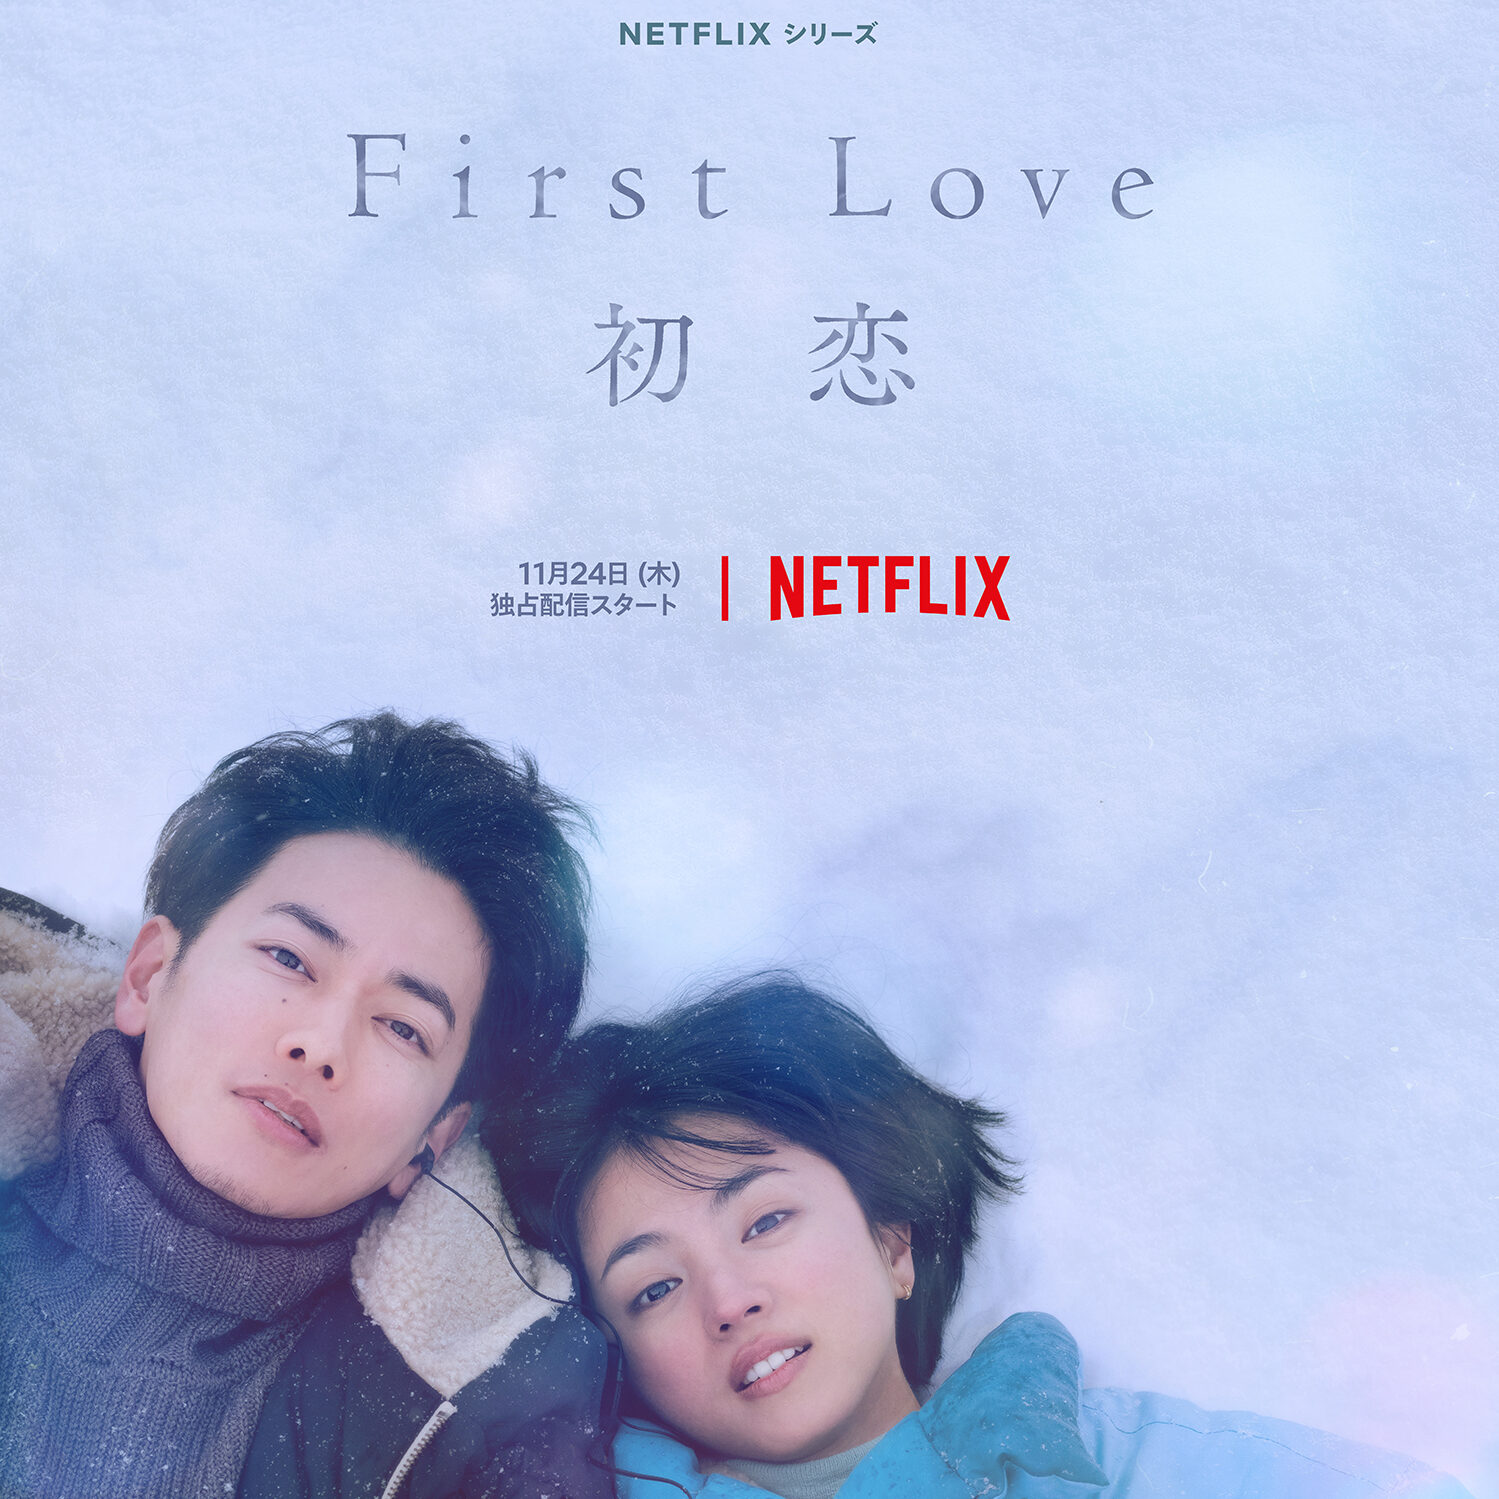 Netflixシリーズ「First Love 初恋」の撮影に協力しました。 - MOHEIM